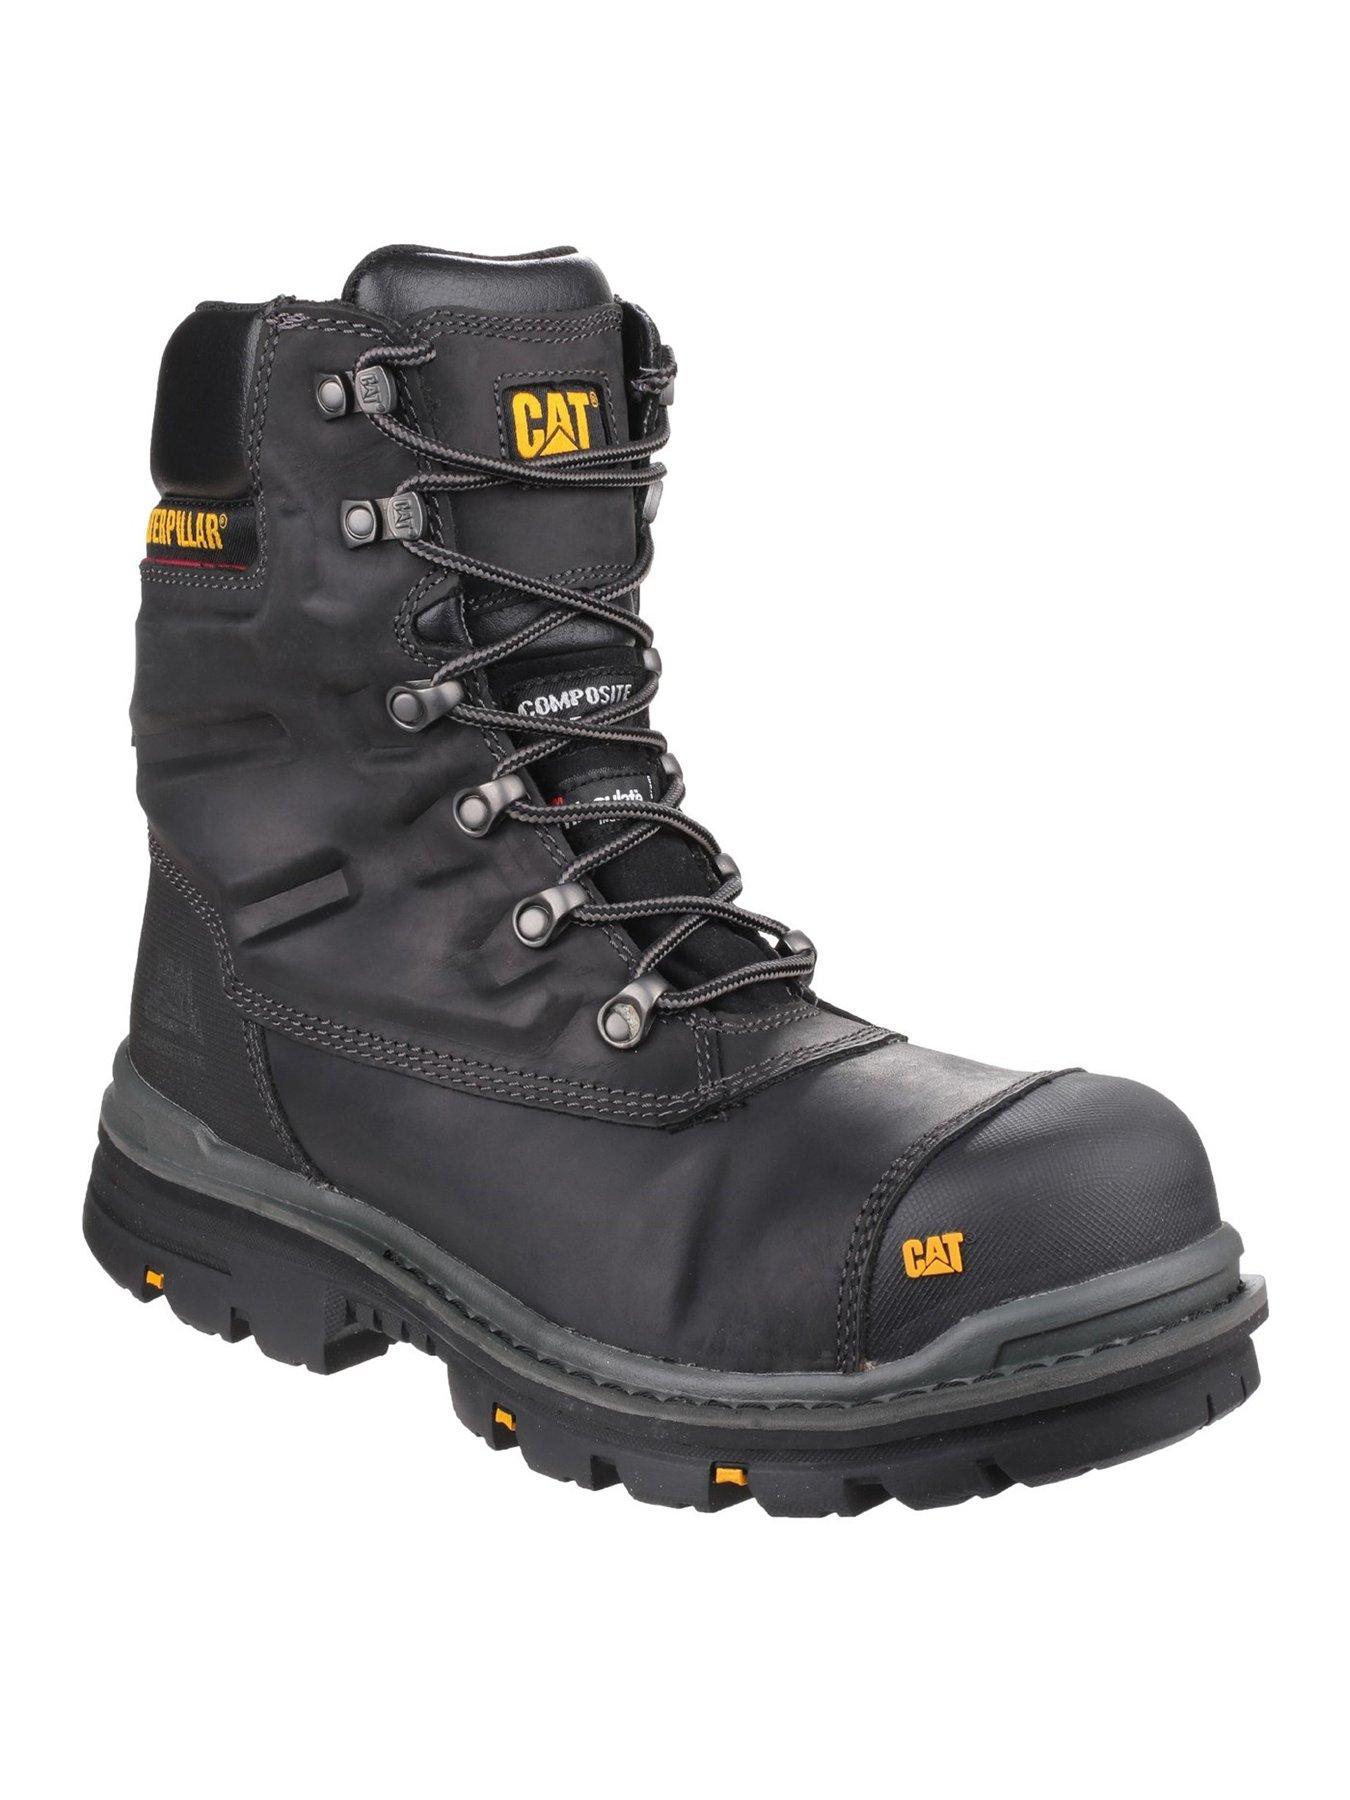  Premier Safety Boots - Black